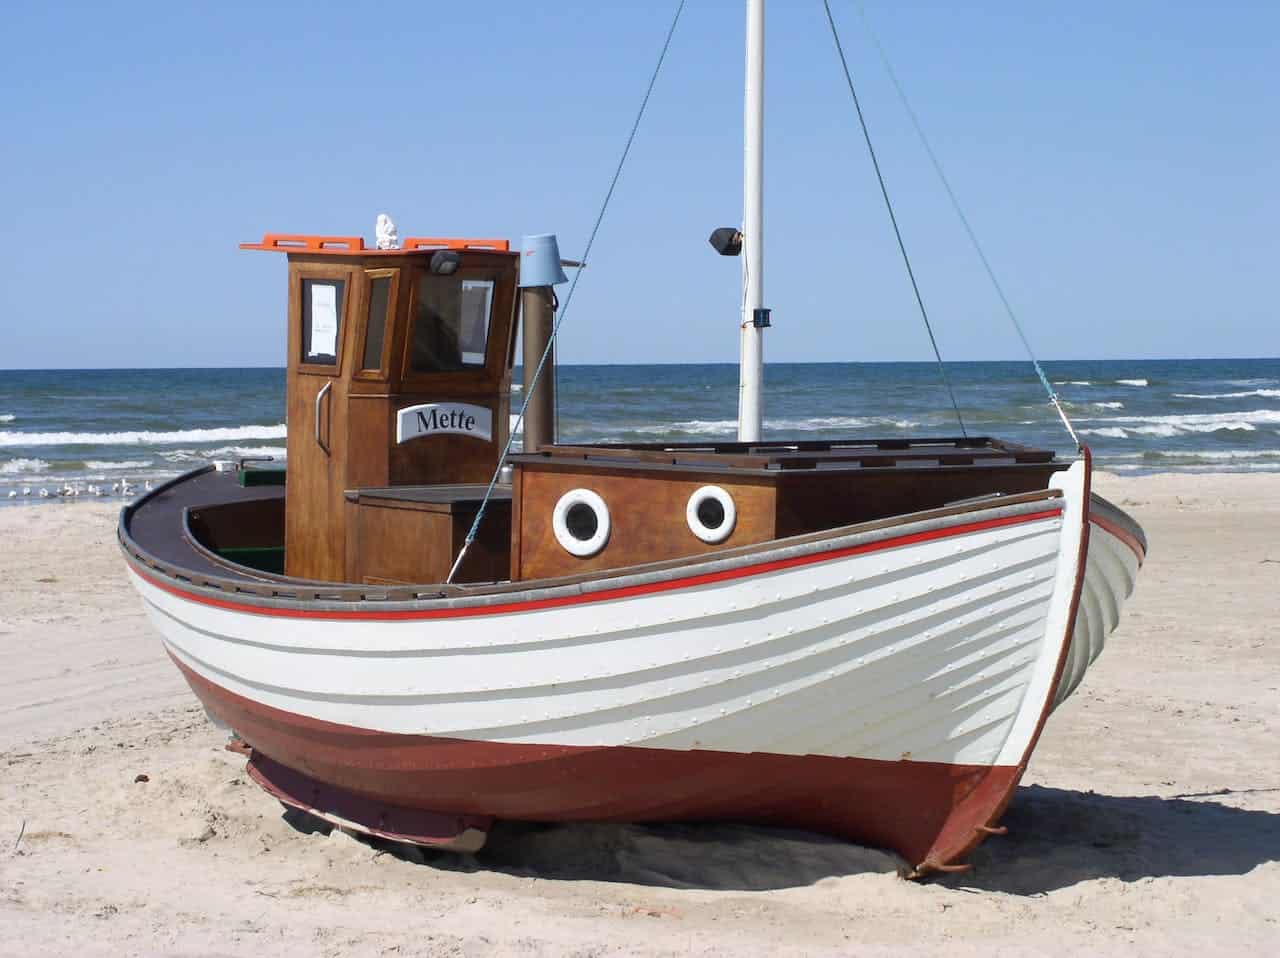 Finn den perfekte båten for ditt behov